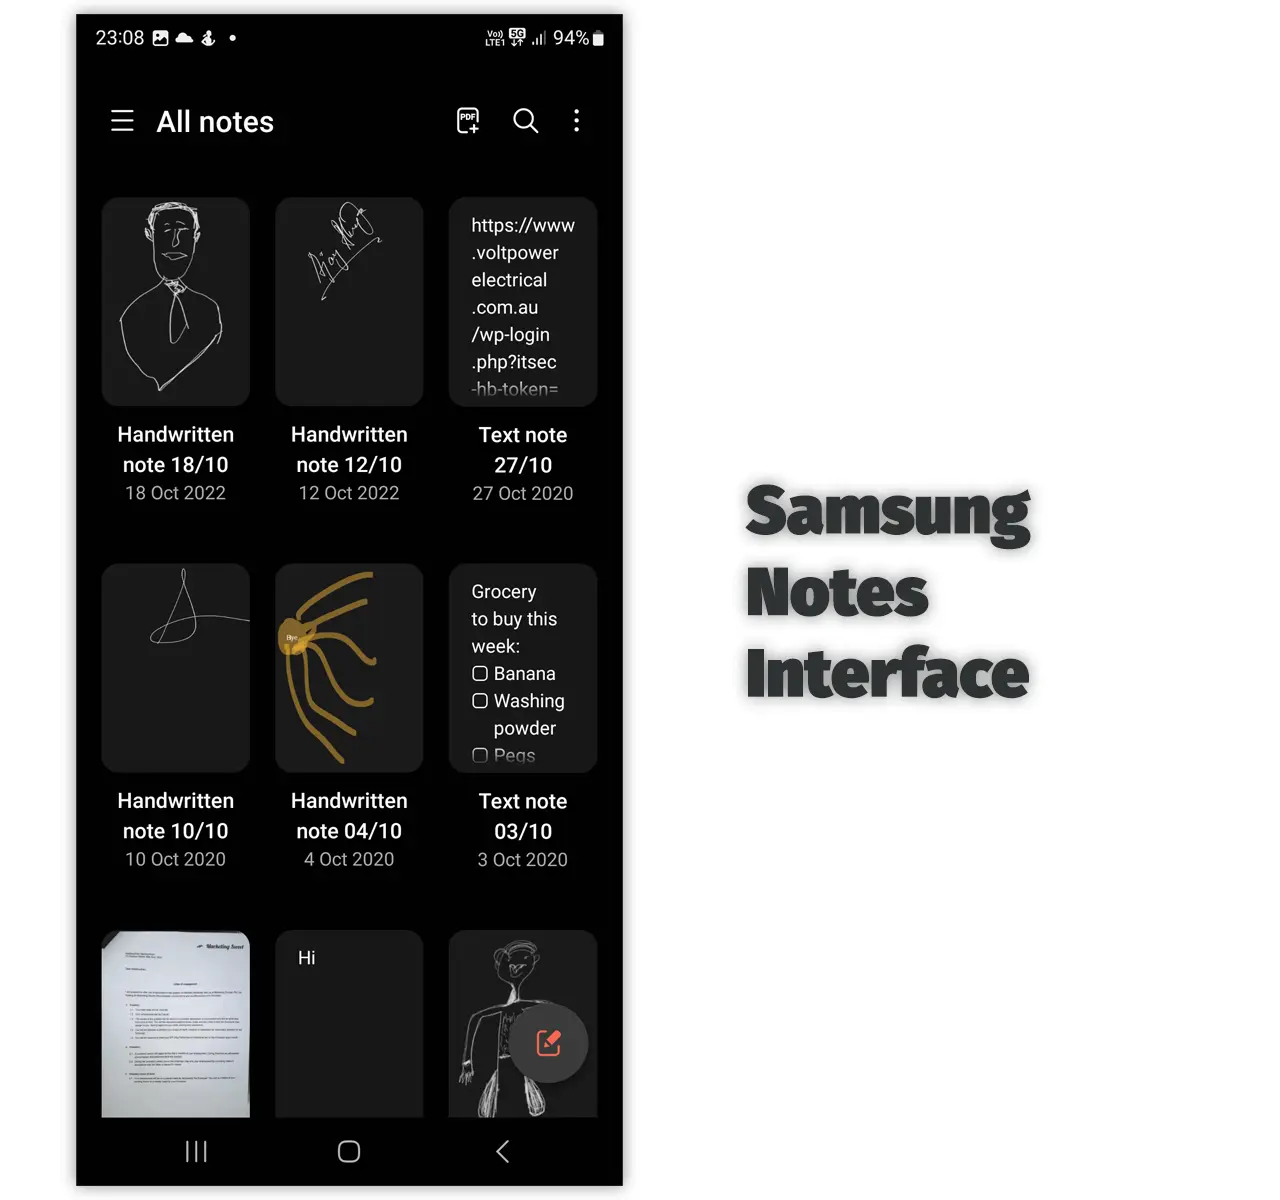 Samsung Notes Interface